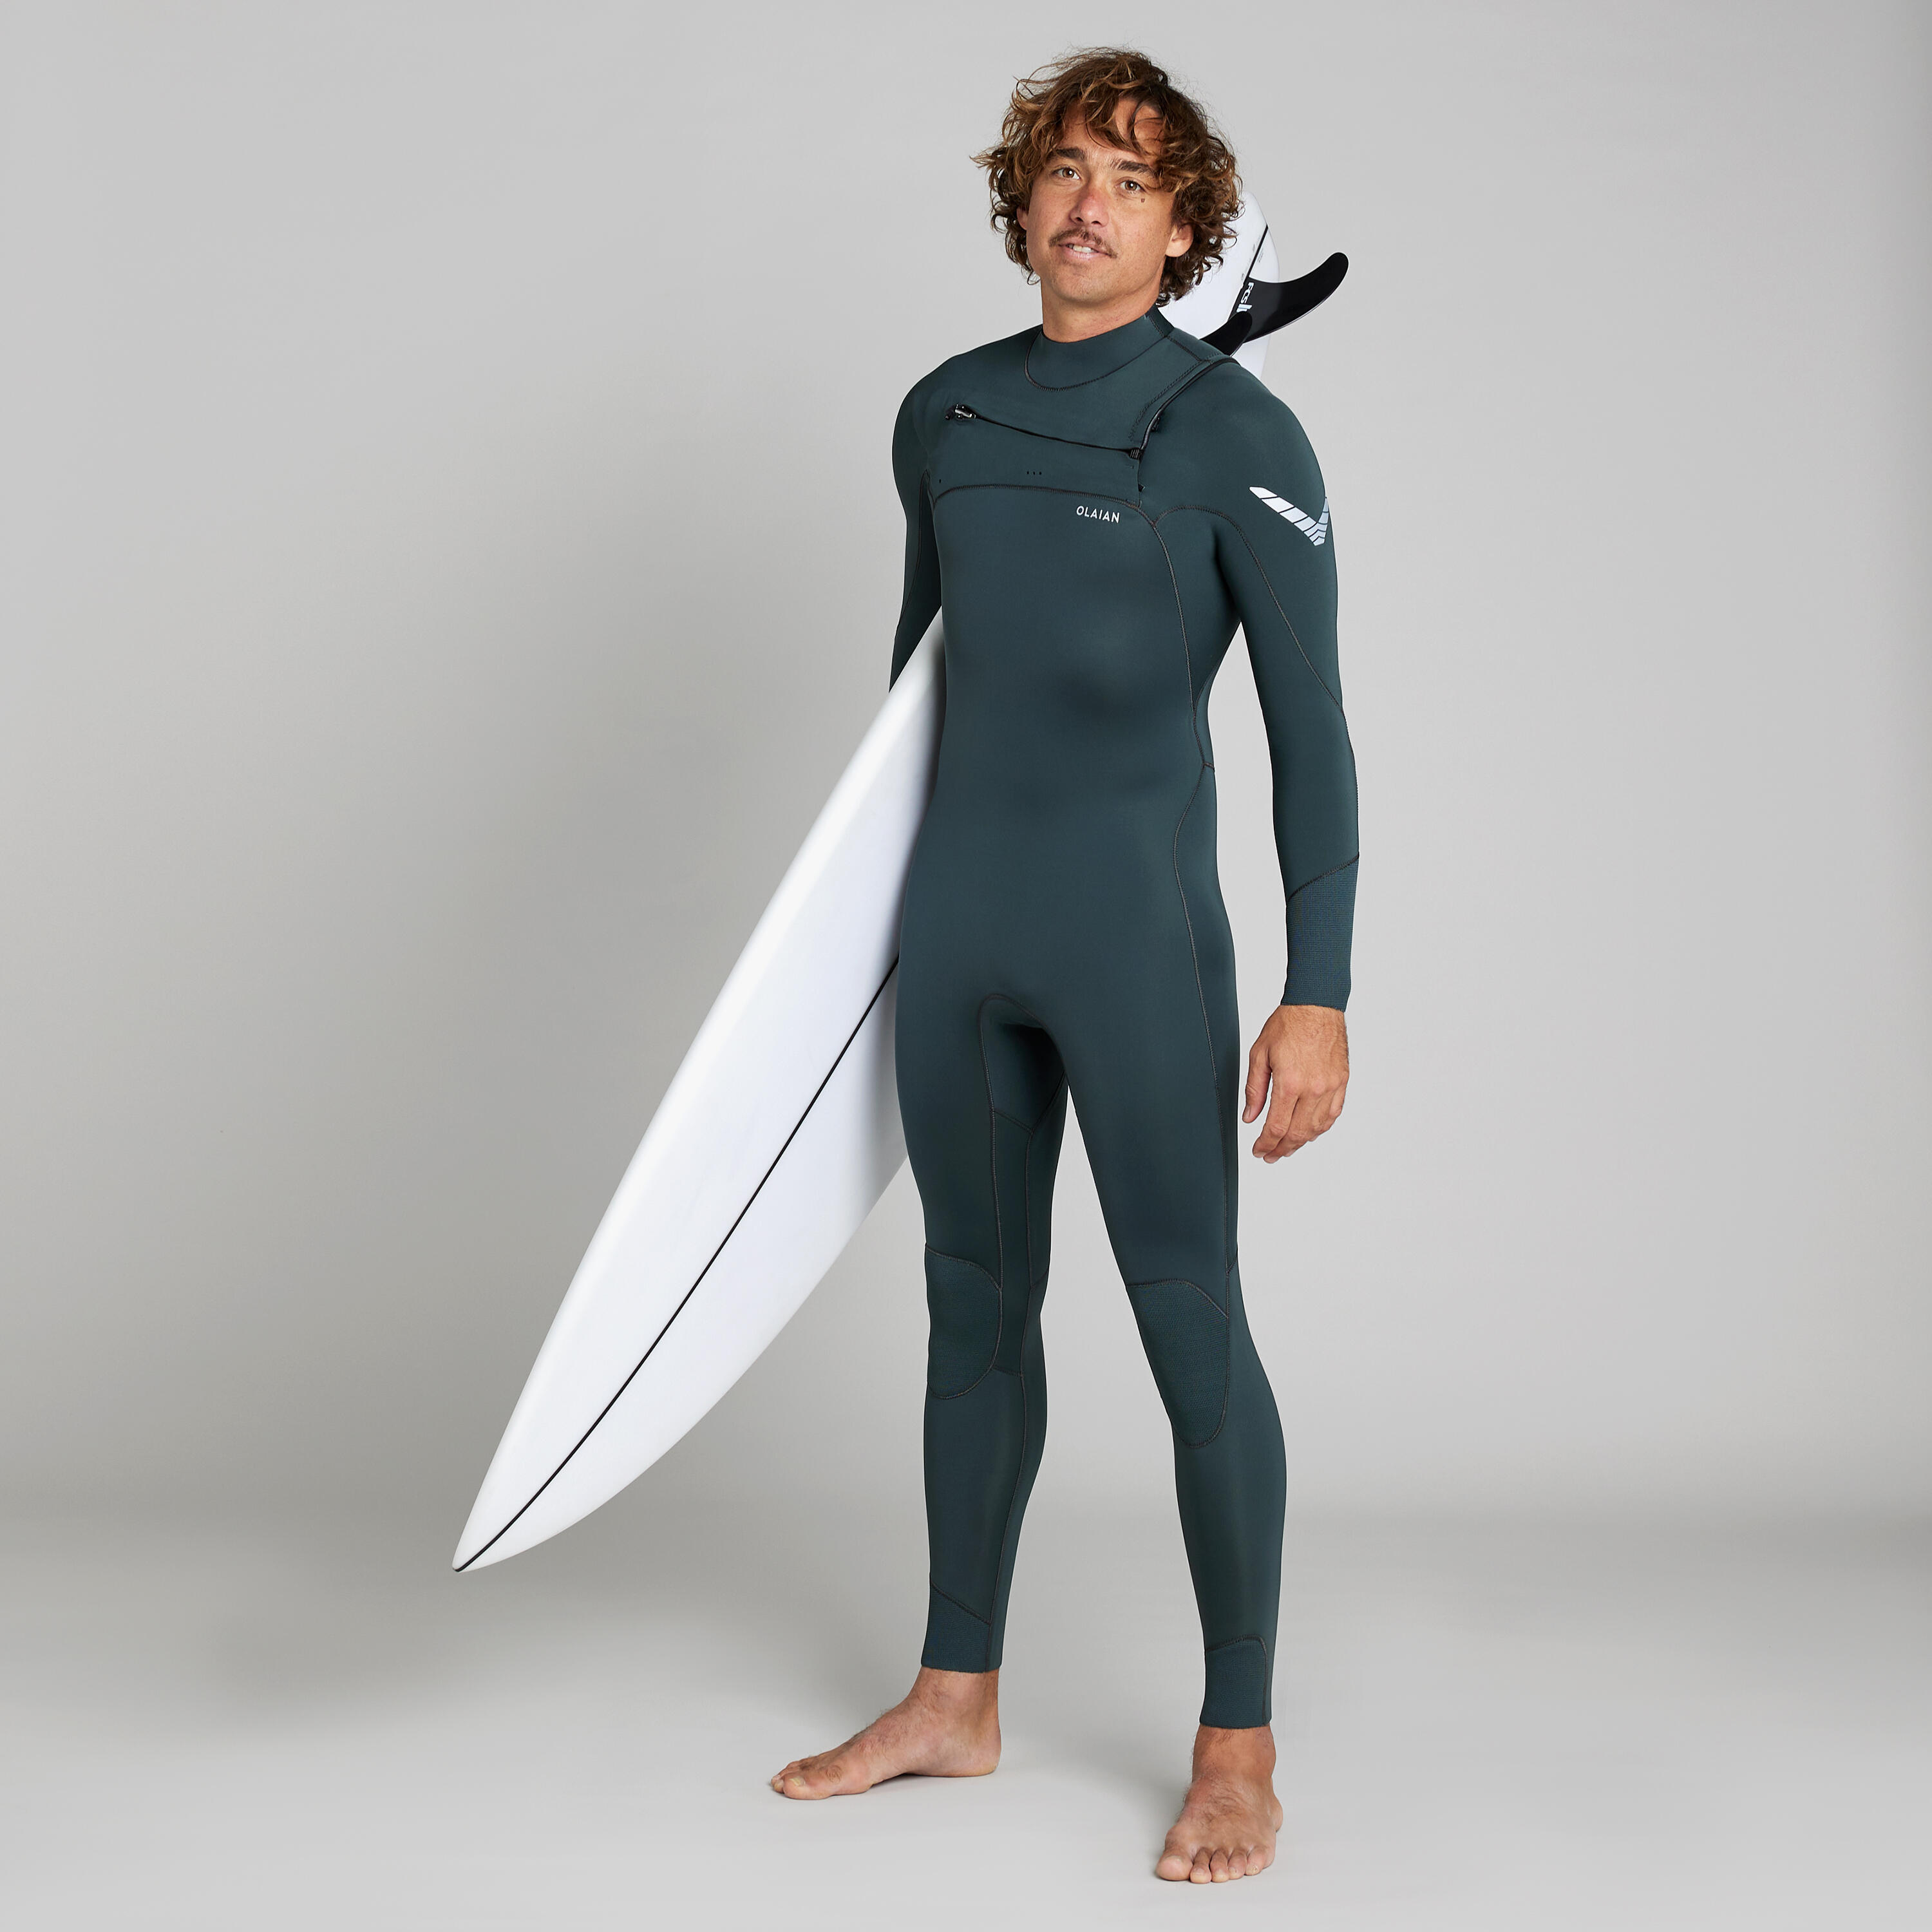 OLAIAN Neoprenanzug Surfen Herren 3/2 mm - 900 dunkelgrün L